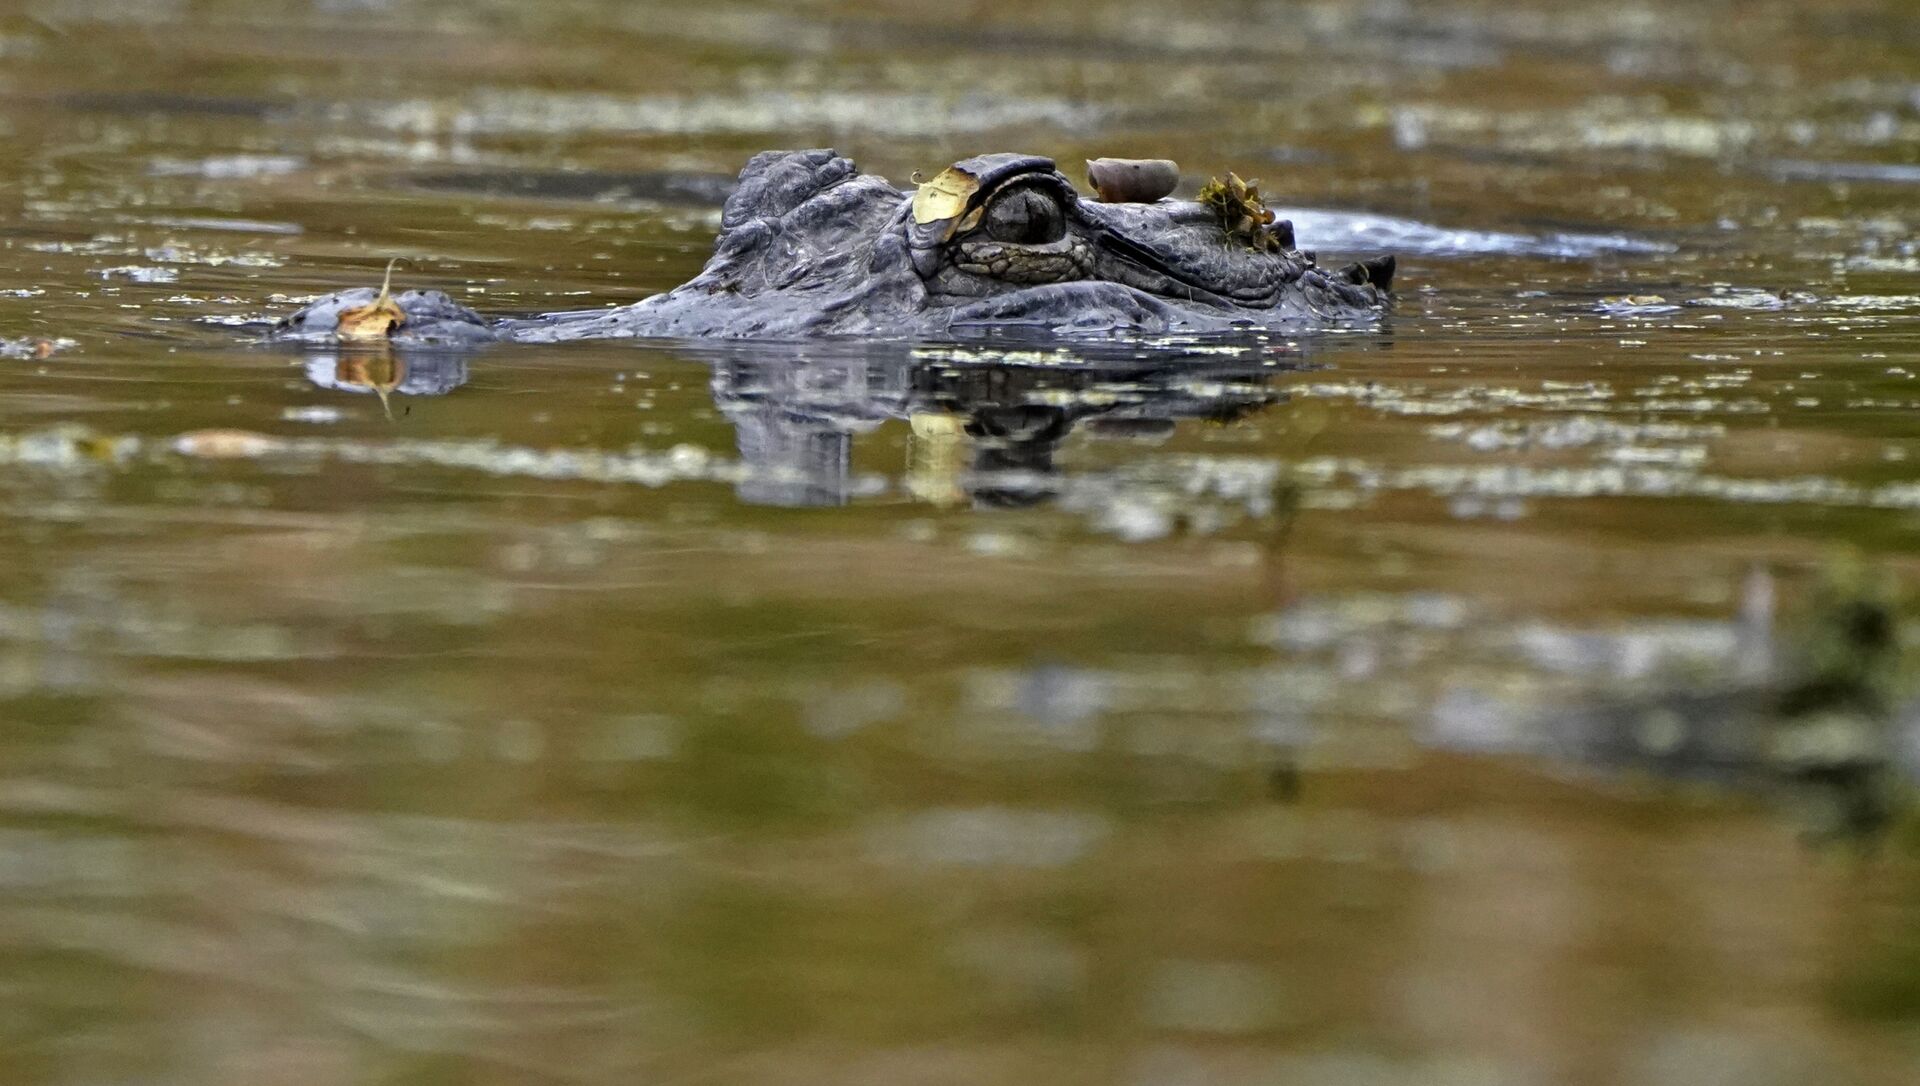 An alligator swims in the Maurepas Swamp, thirty miles outside New Orleans, in Ruddock, La., Saturday, Feb. 27, 2021. - Sputnik International, 1920, 11.06.2021